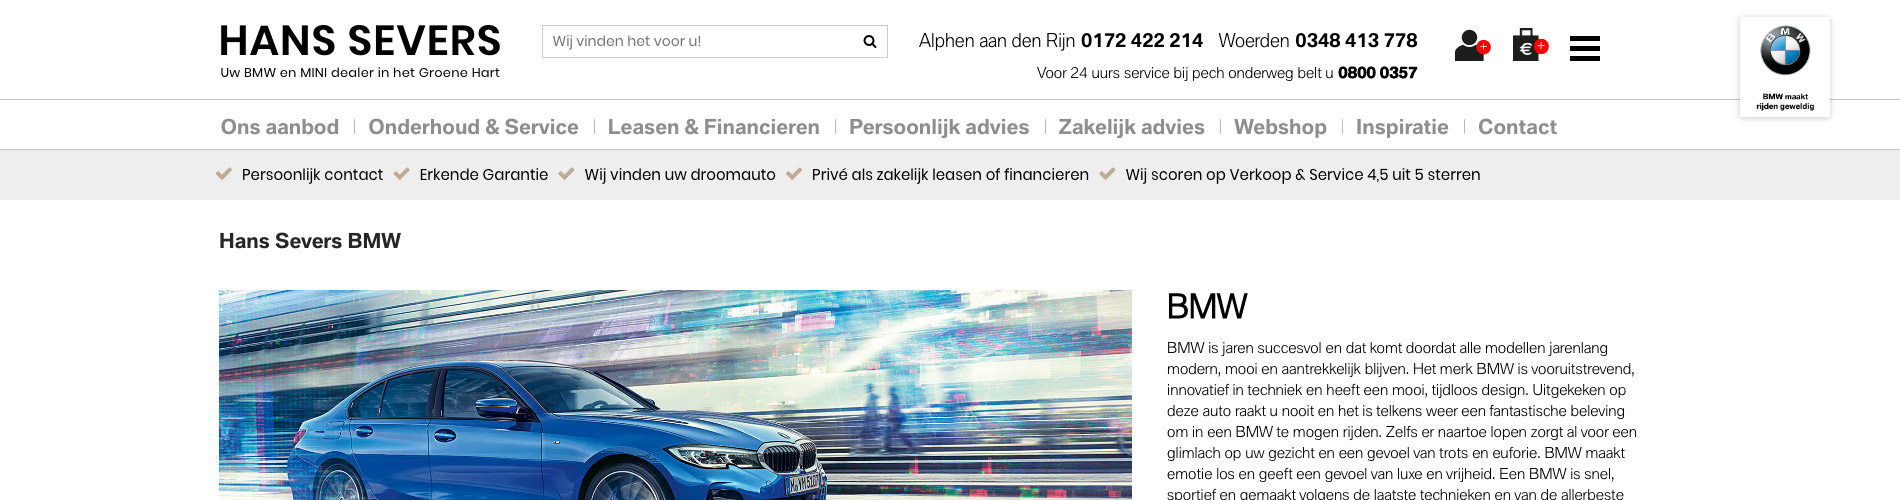 BMW CI Hans Severs website